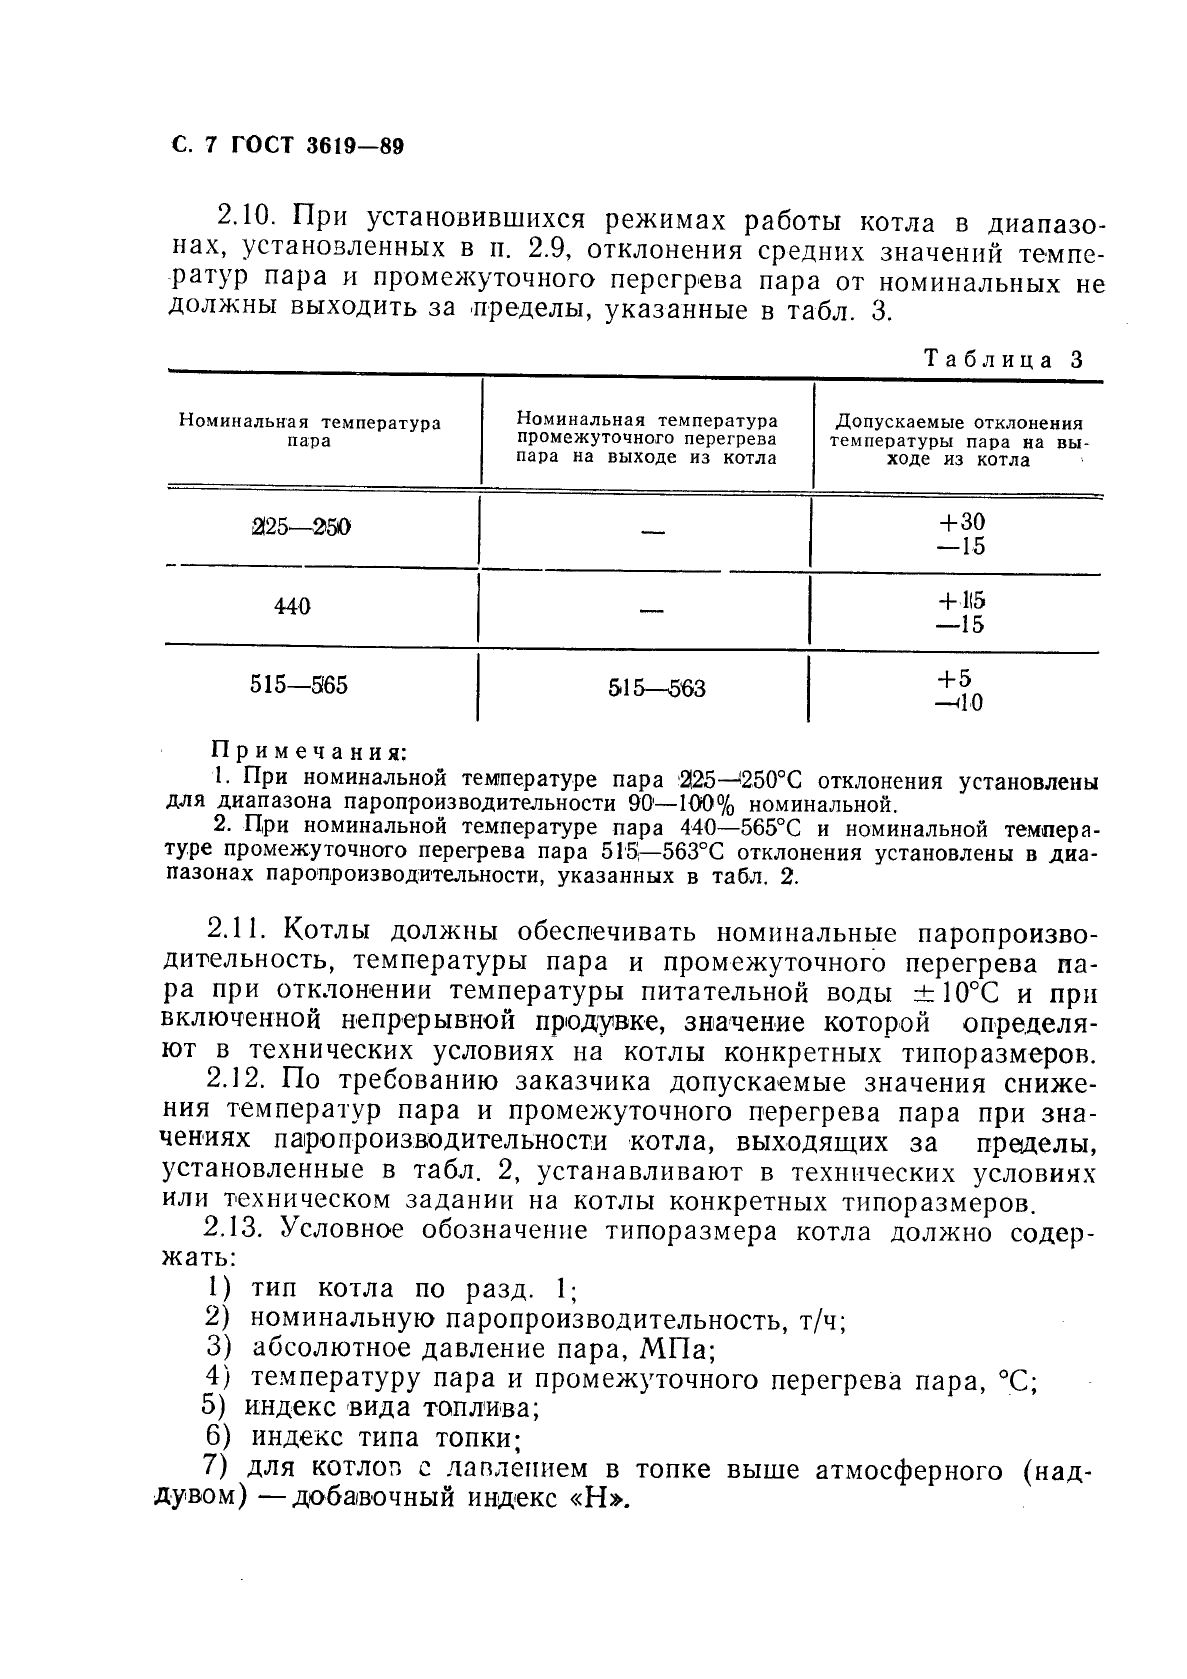 ГОСТ 3619-89